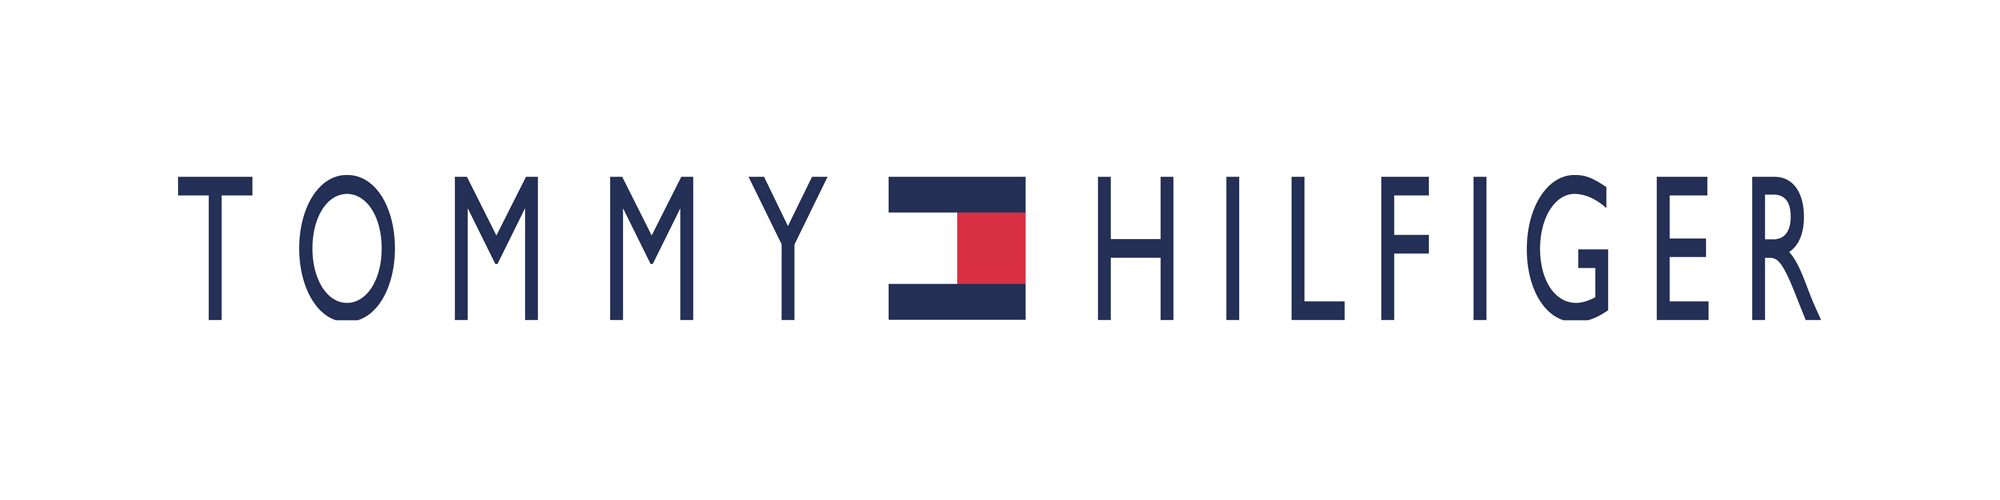 tommy hill logo